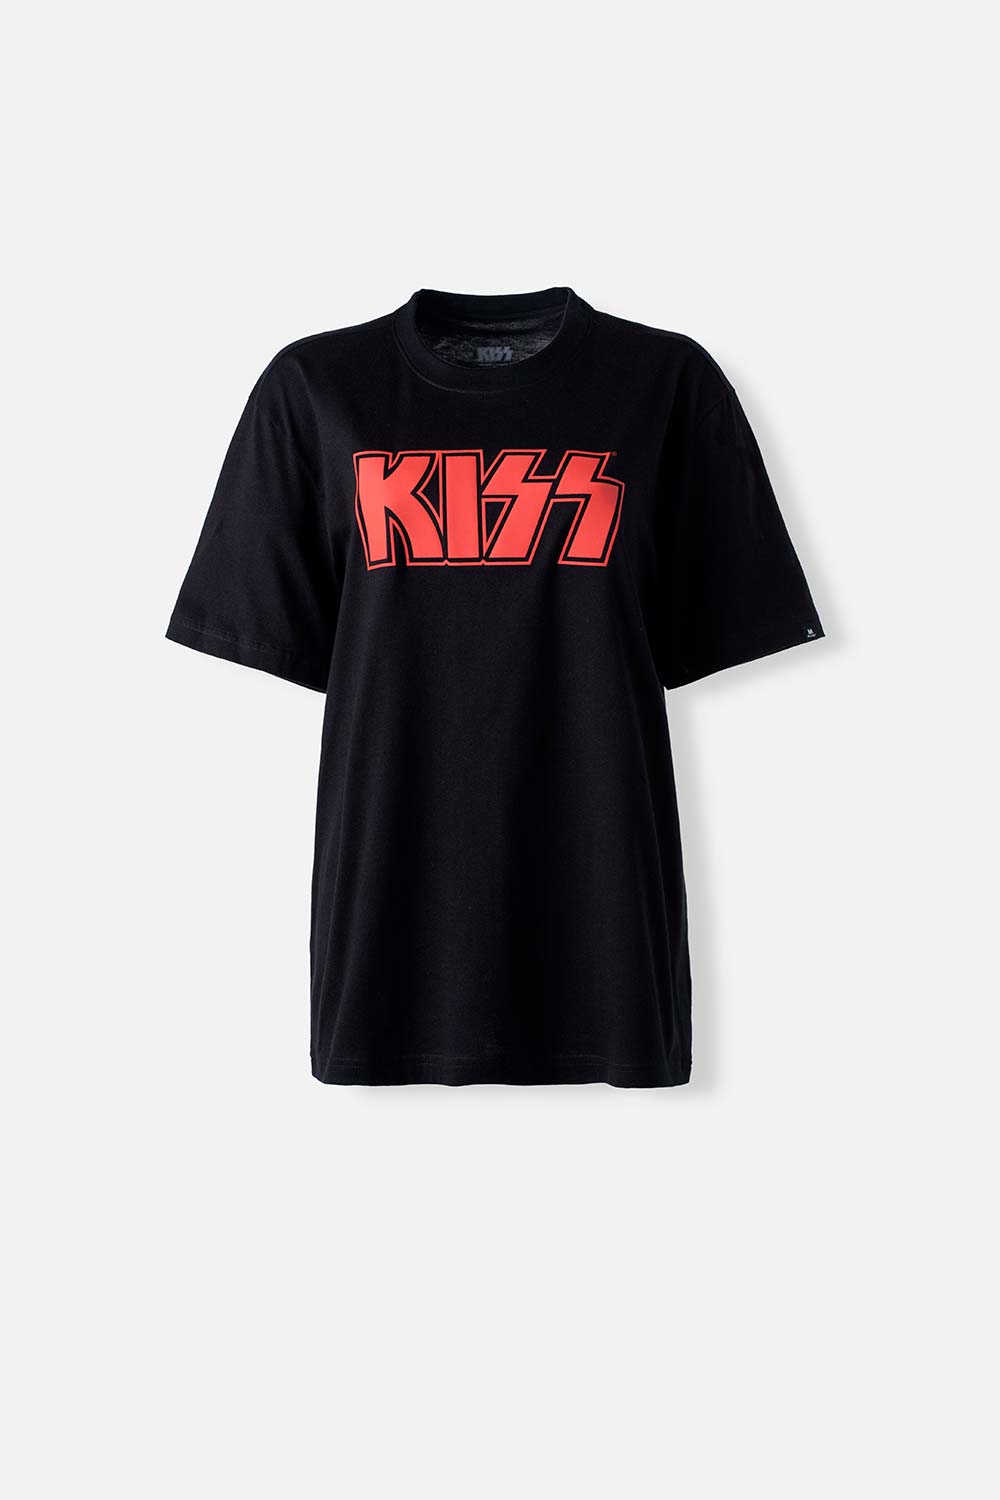 Camiseta de Kiss negra de silueta clásica  género neutro XS-0